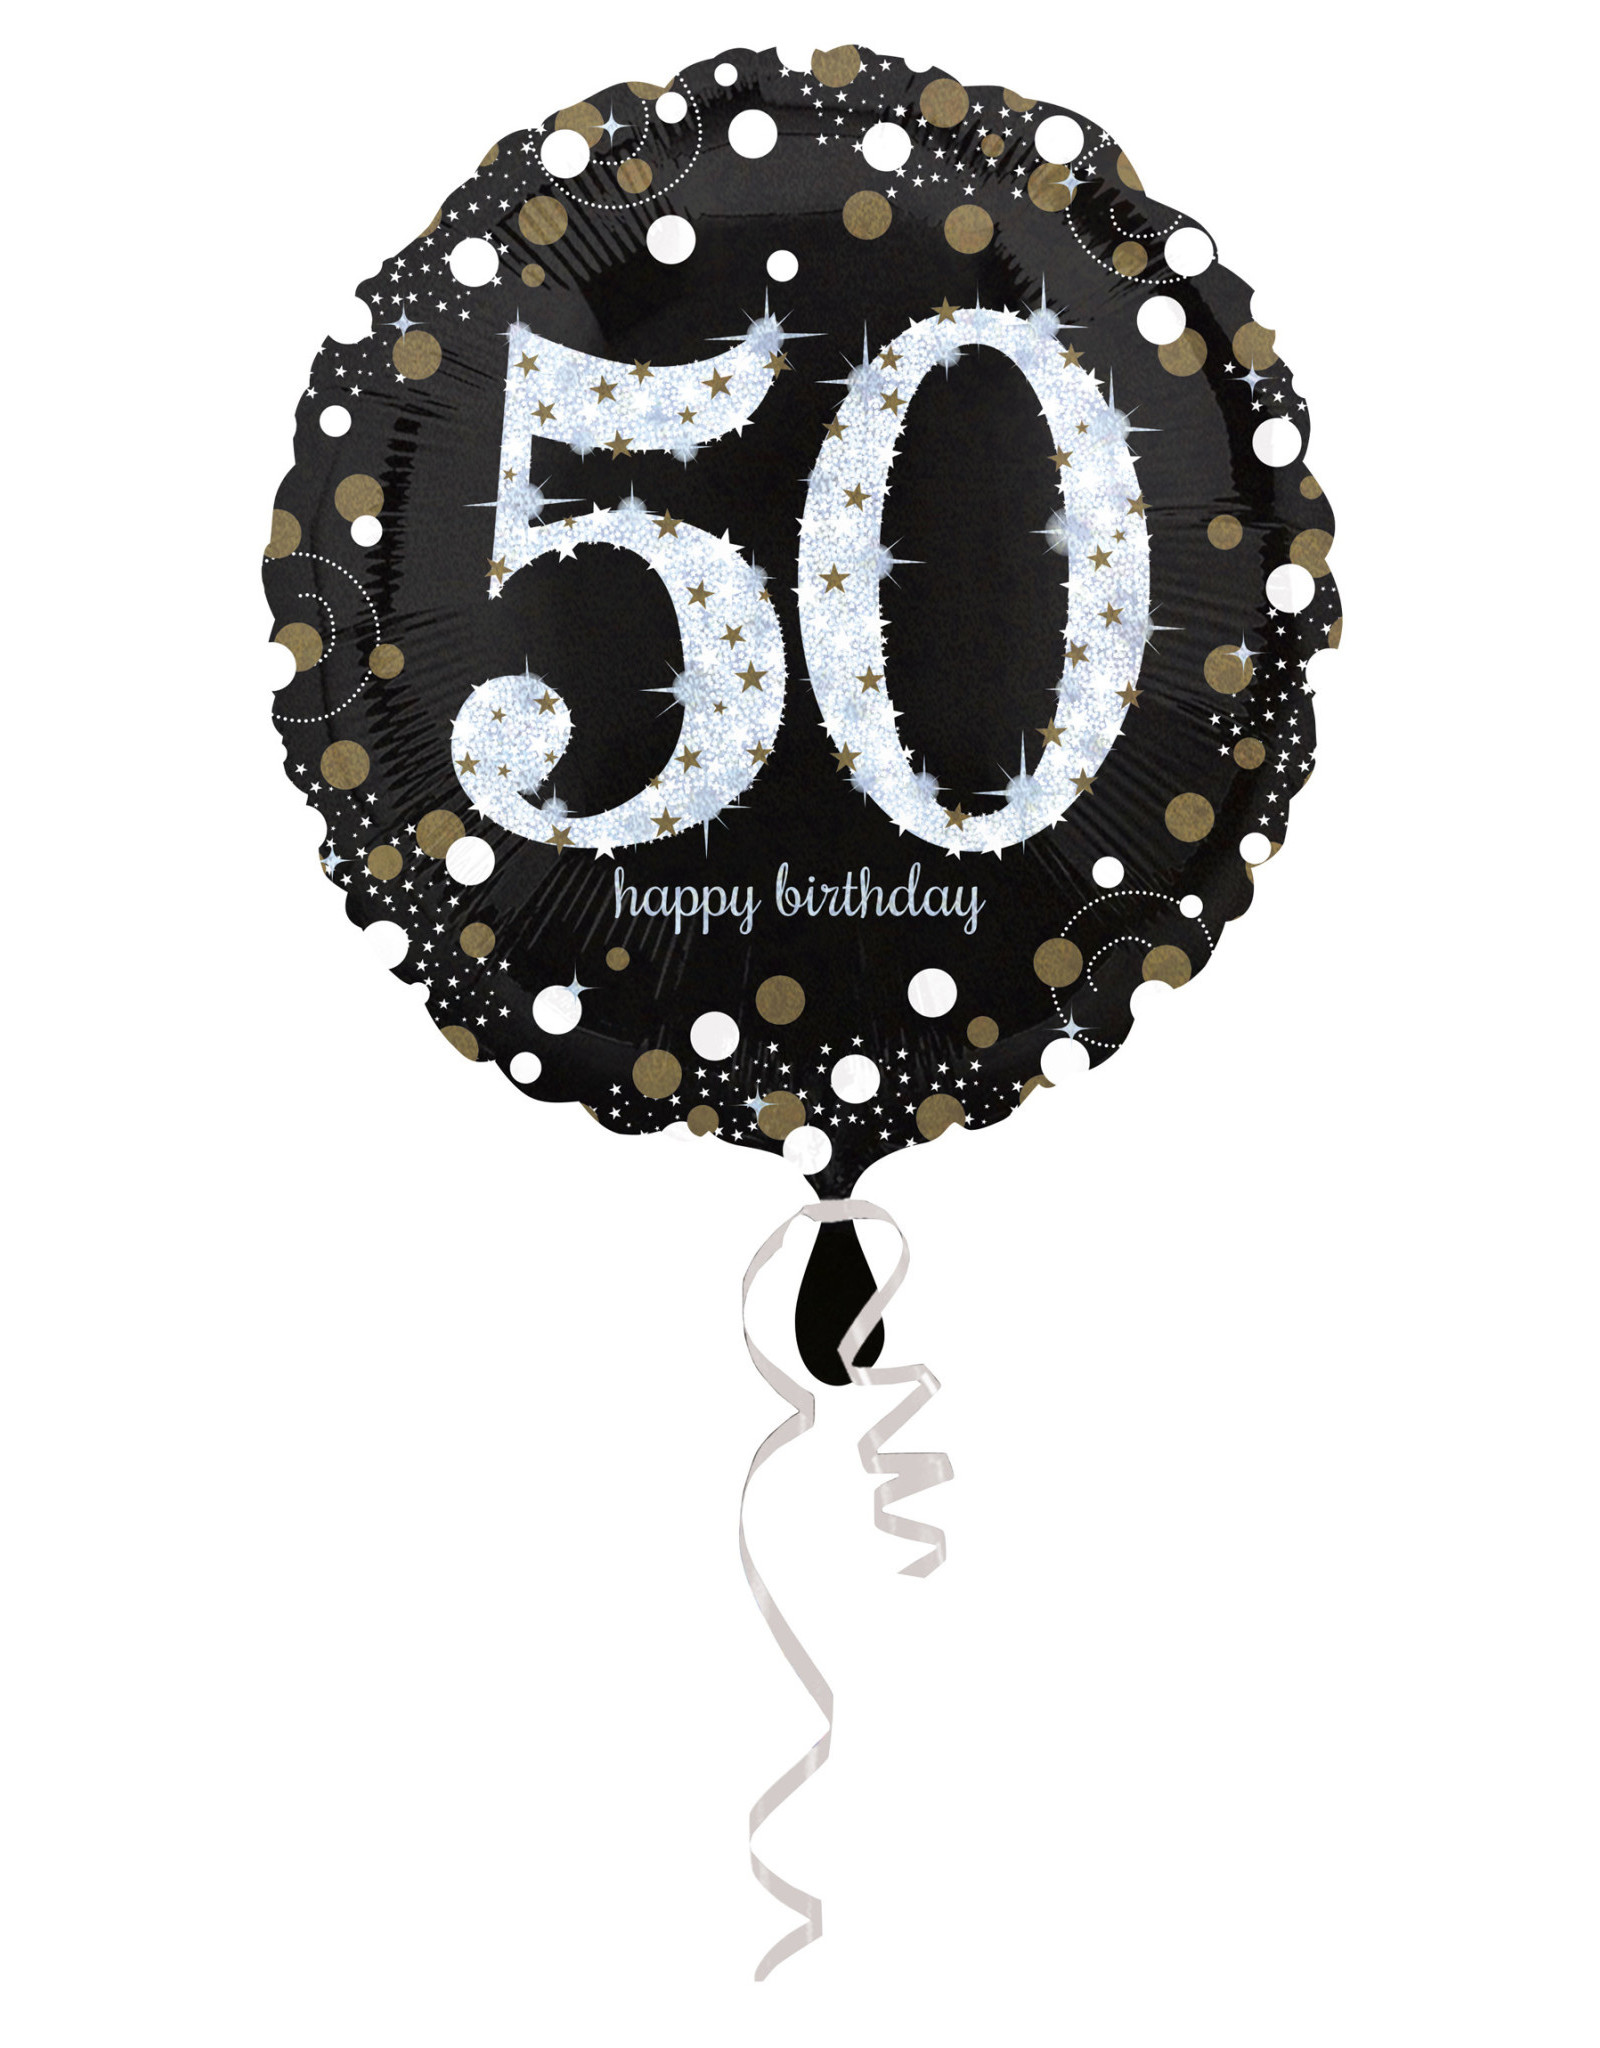 Amscan sparkling folieballon 50 jaar zilver 45 cm